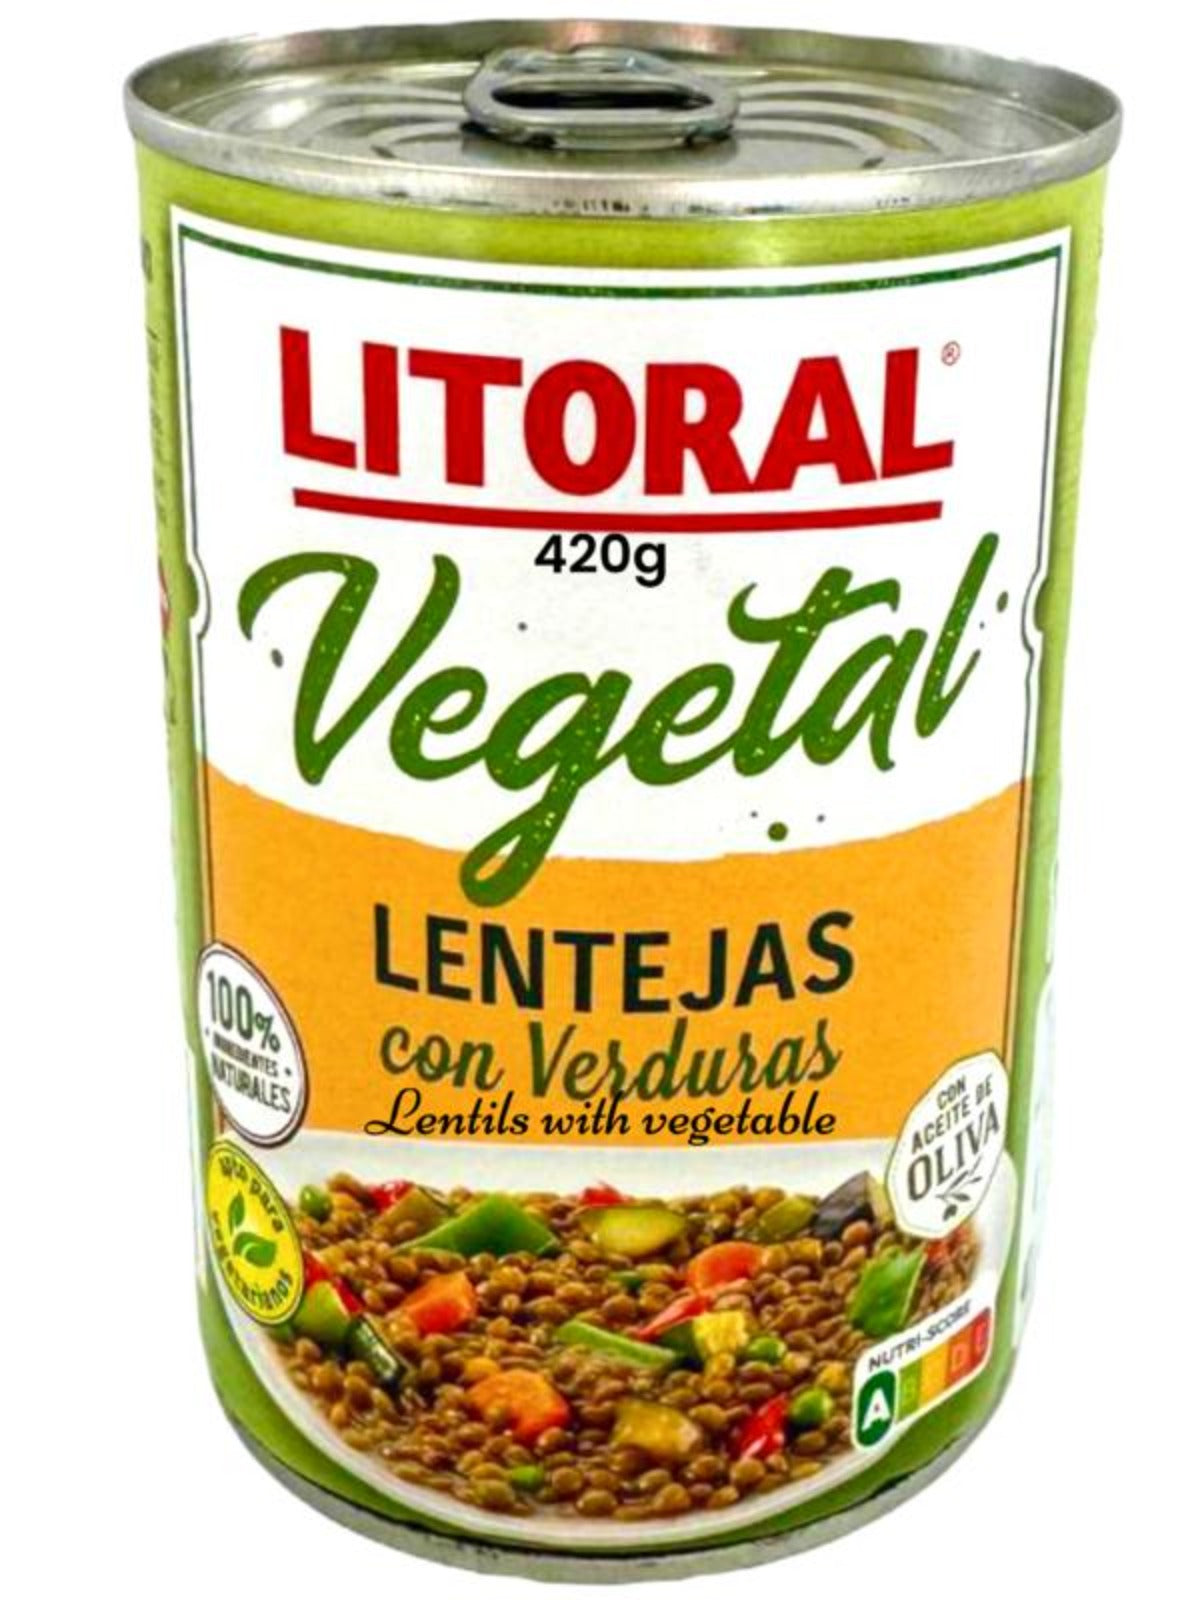 Litoral Vegetal Lentejas con Verduras Lentils with Vegetables 420g